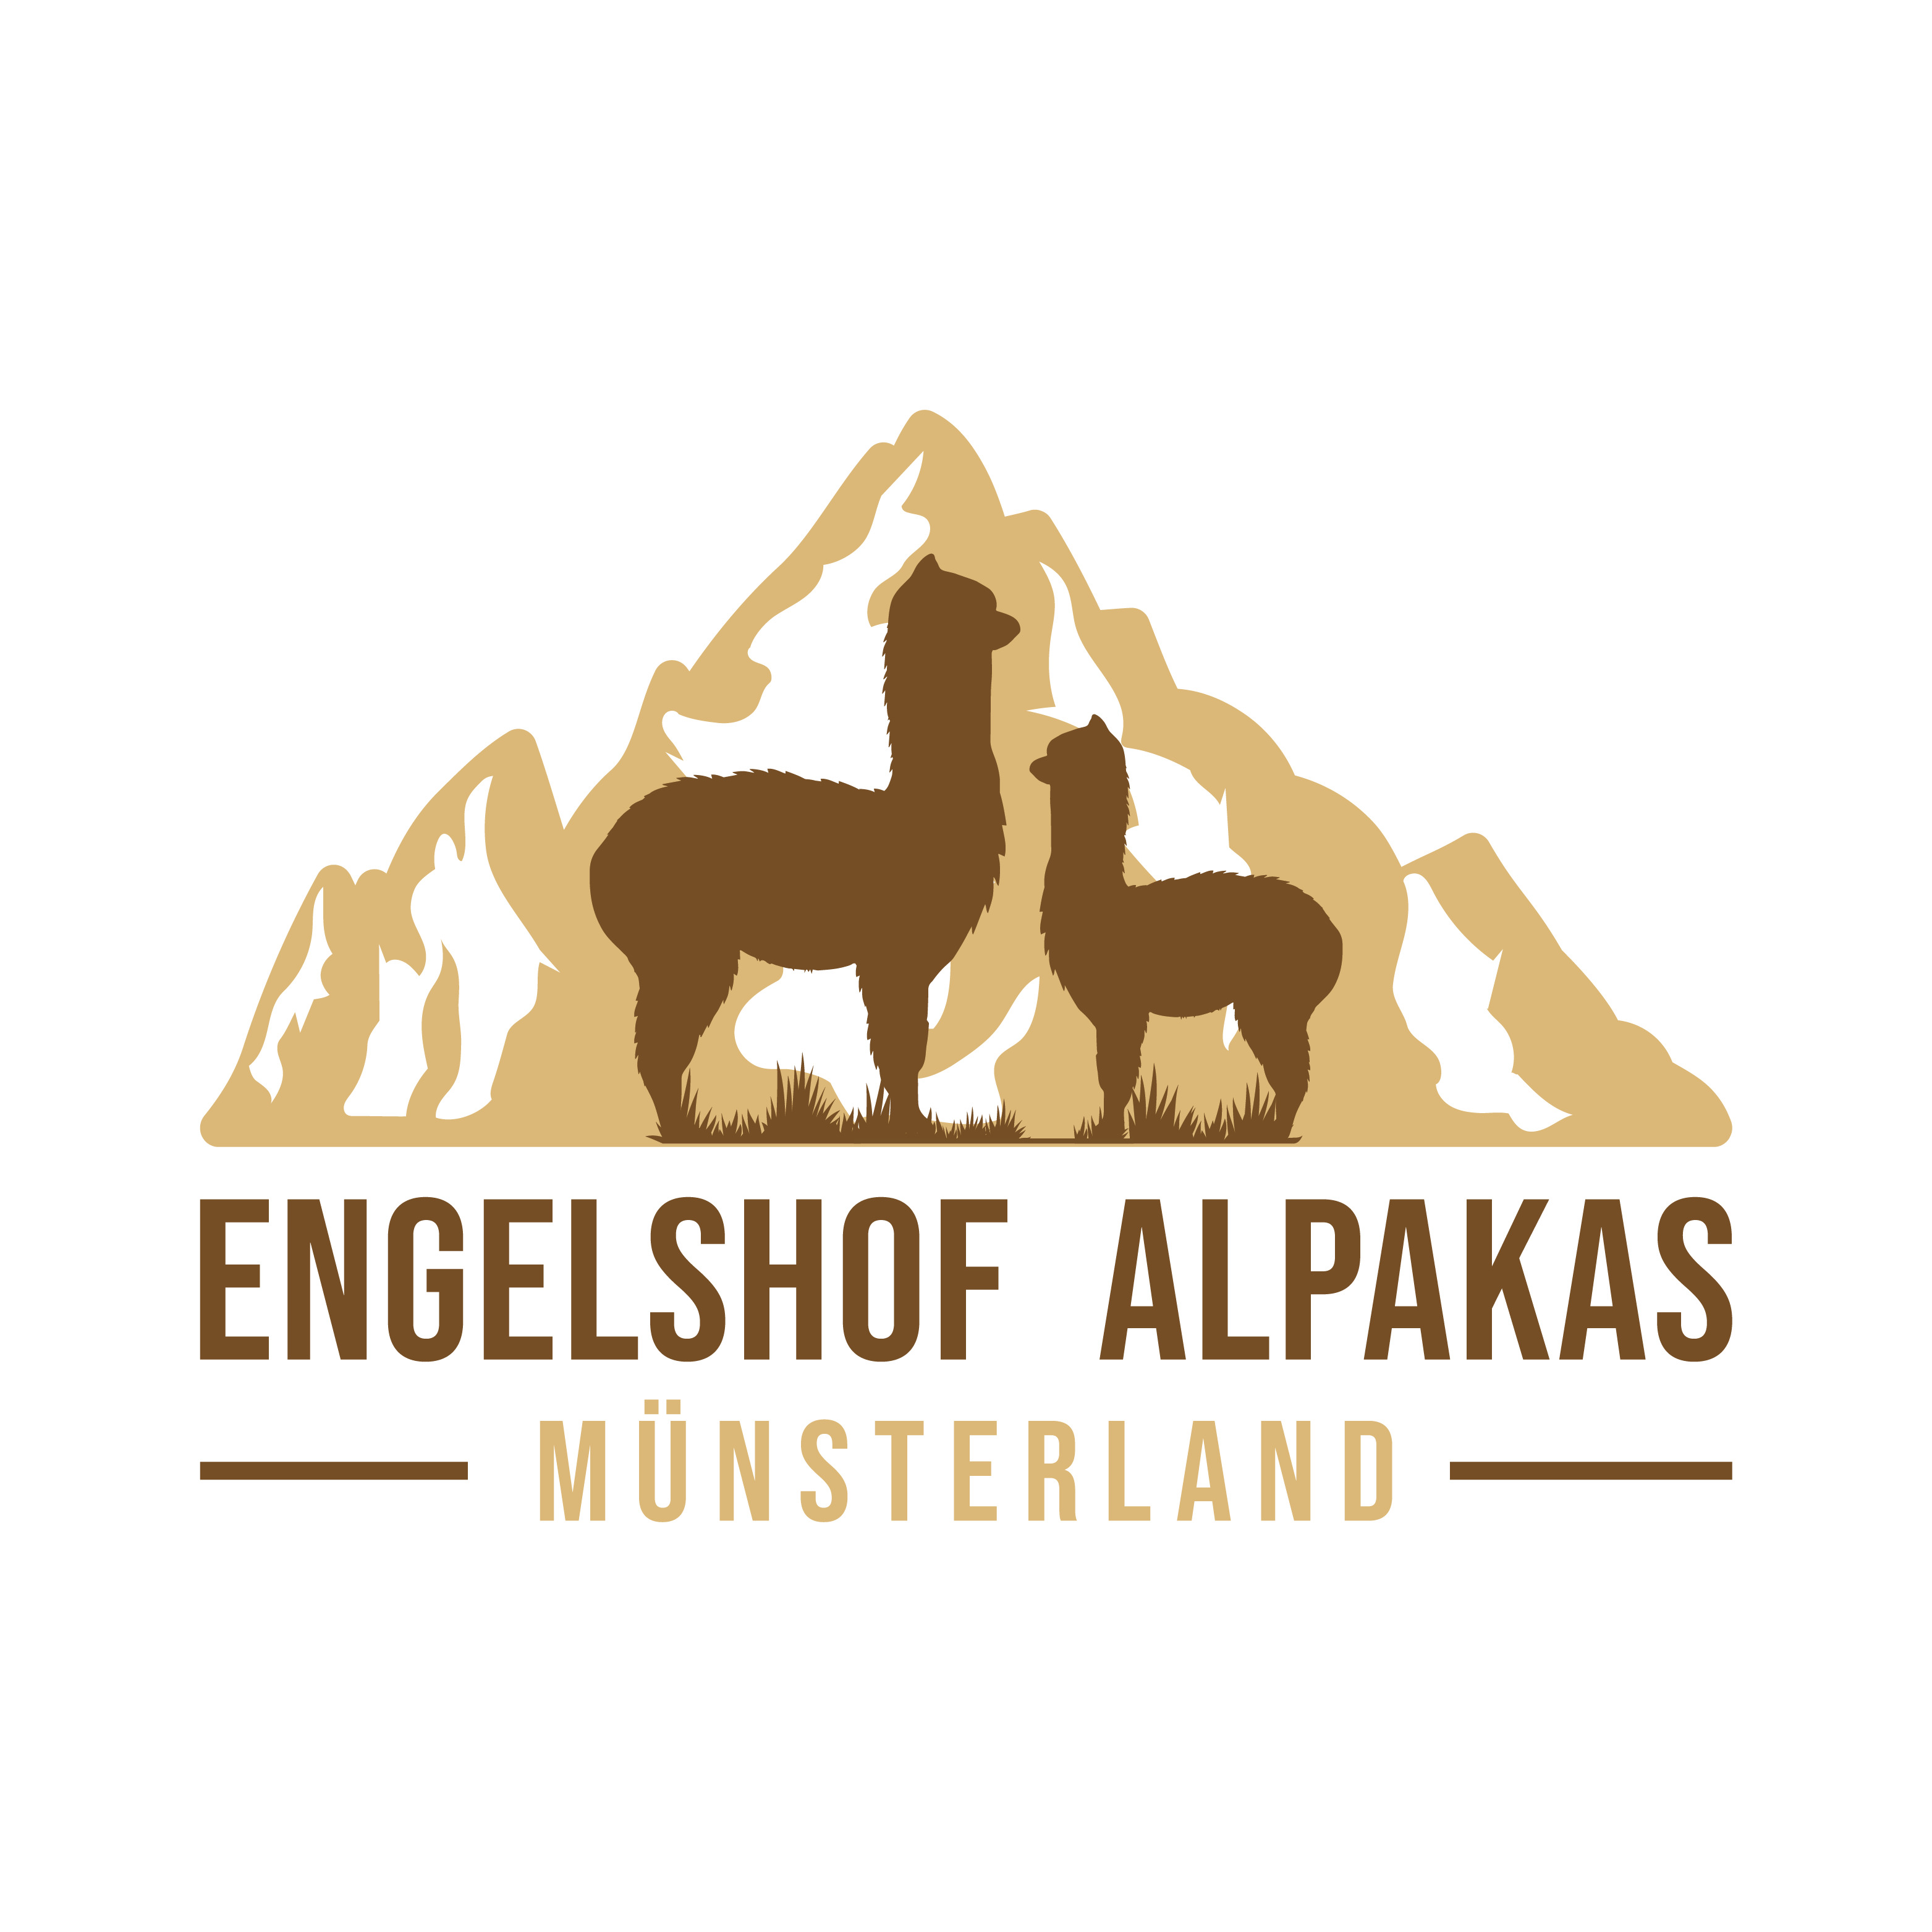 Engelshof Alpakas Münsterland in Wettringen Kreis Steinfurt - Logo